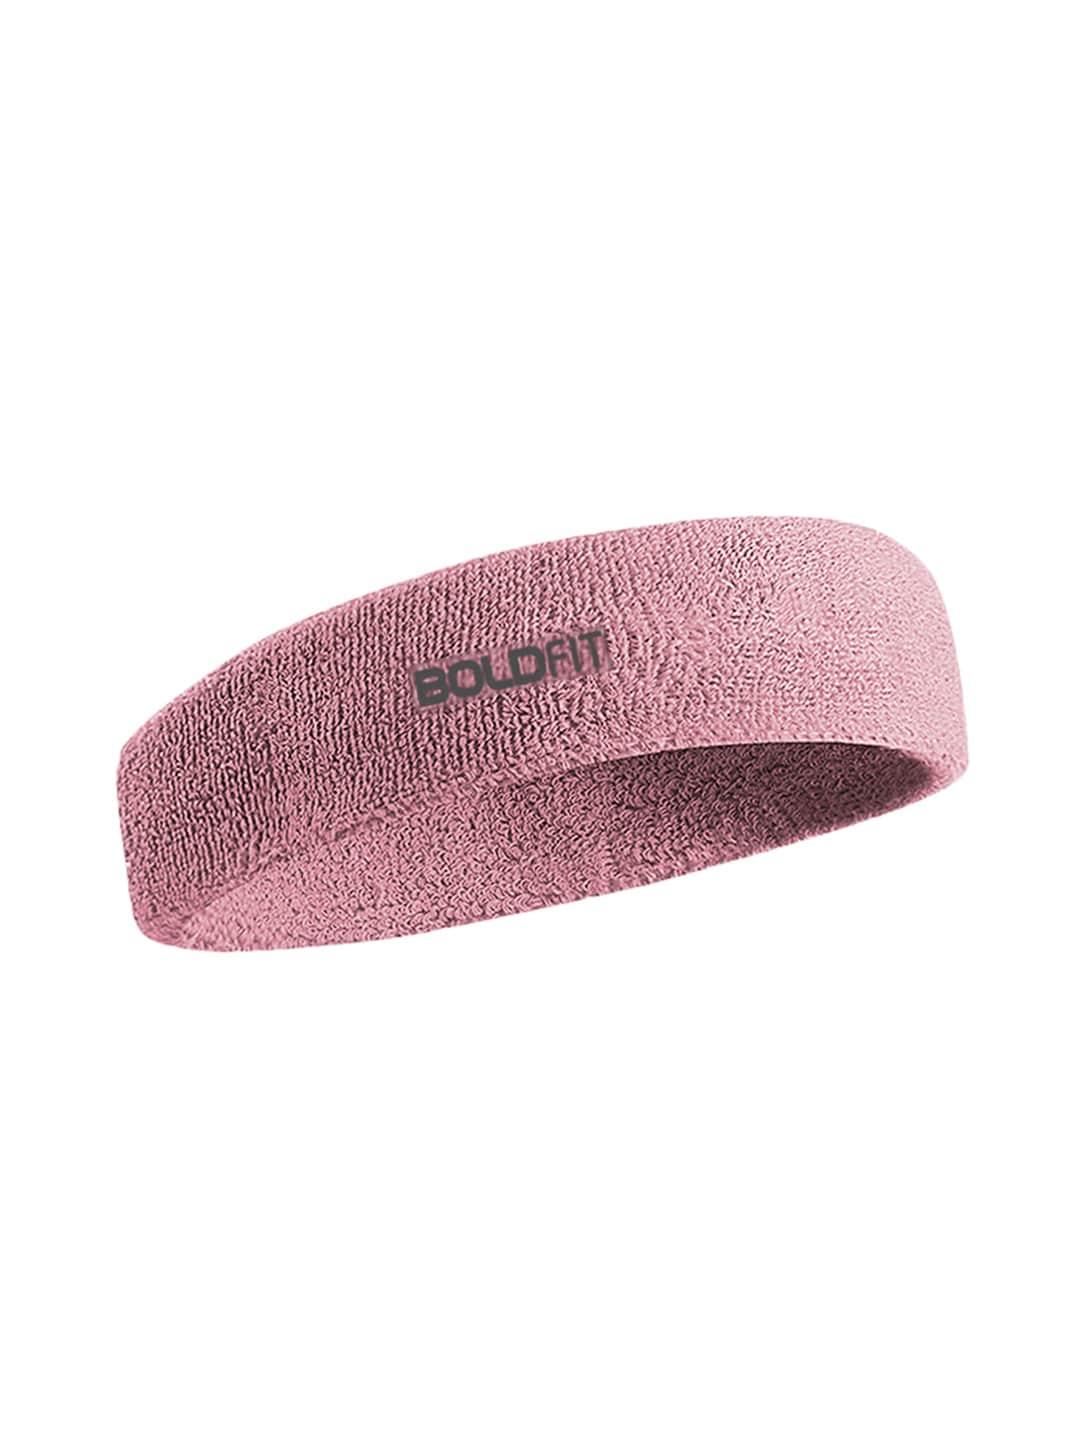 boldfit pink solid non-slip headband